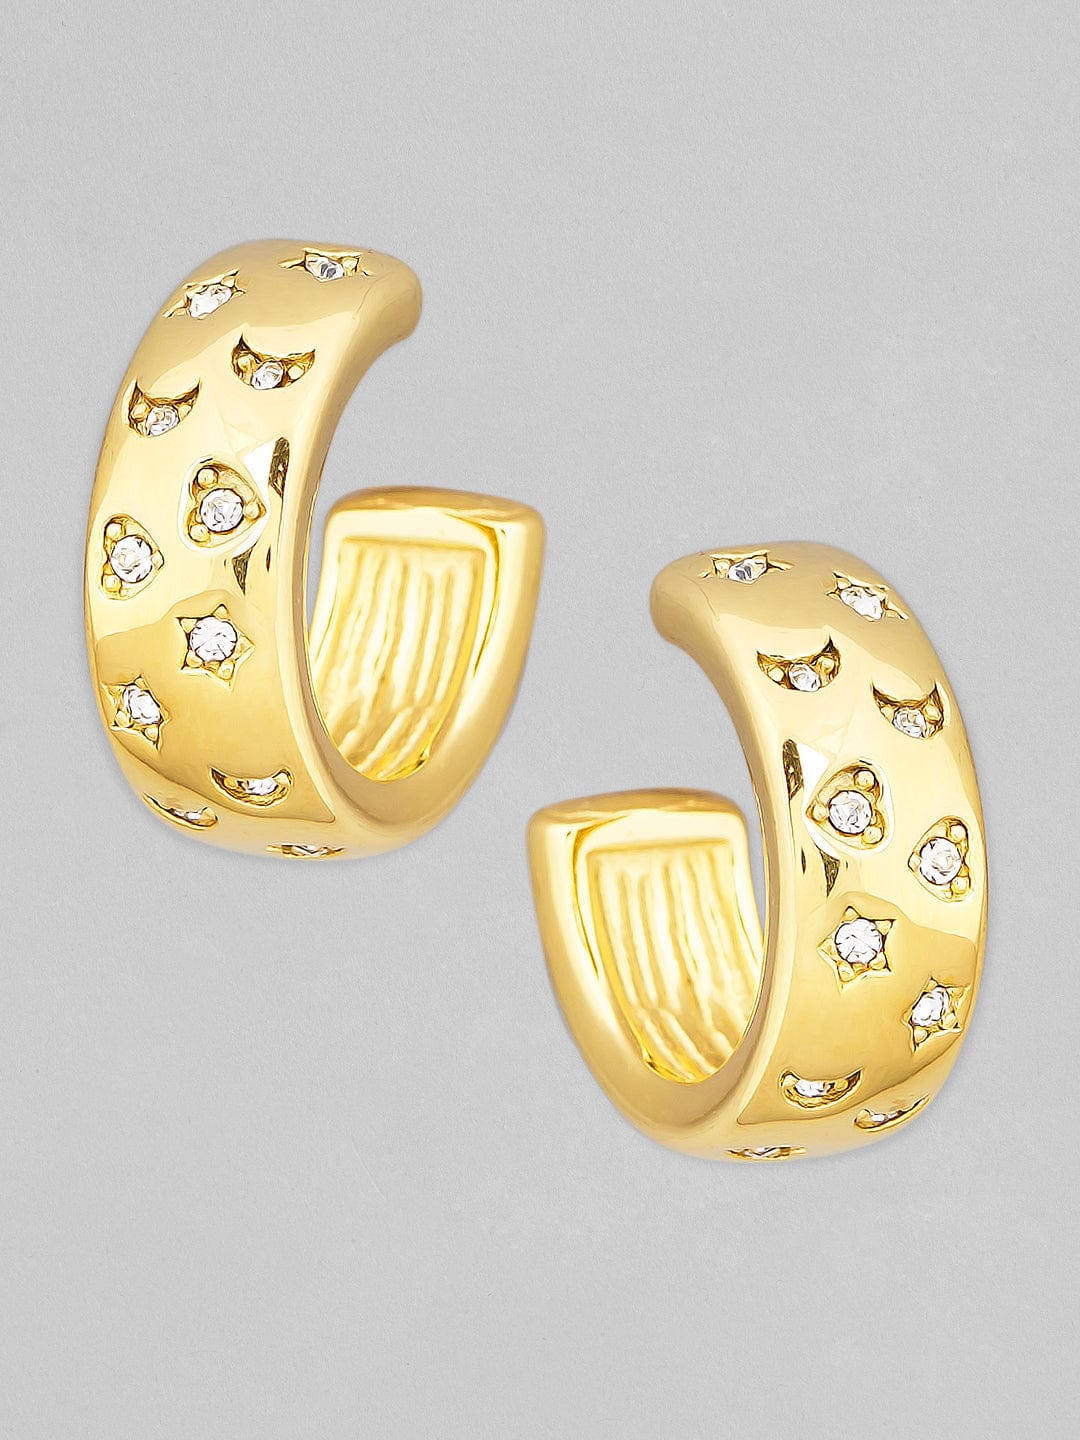 Rubans Voguish 18K Gold Plated Stainless Steel Waterproof Hoop Earring With Zircons Studded. Earrings